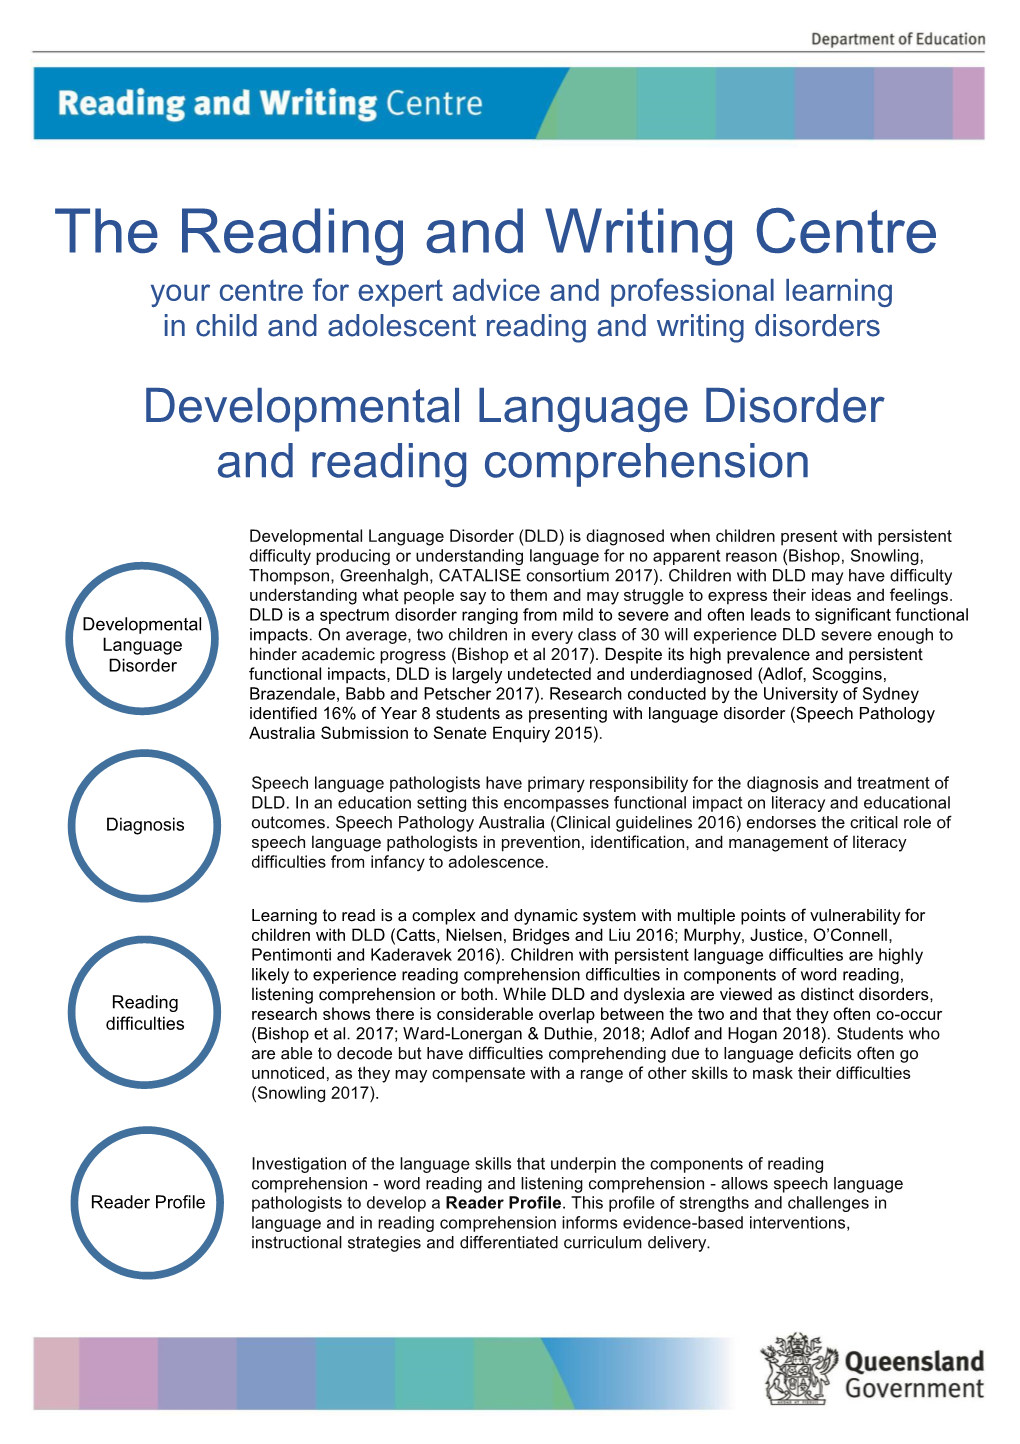 Developmental Language Disorder and Reading Comprehension